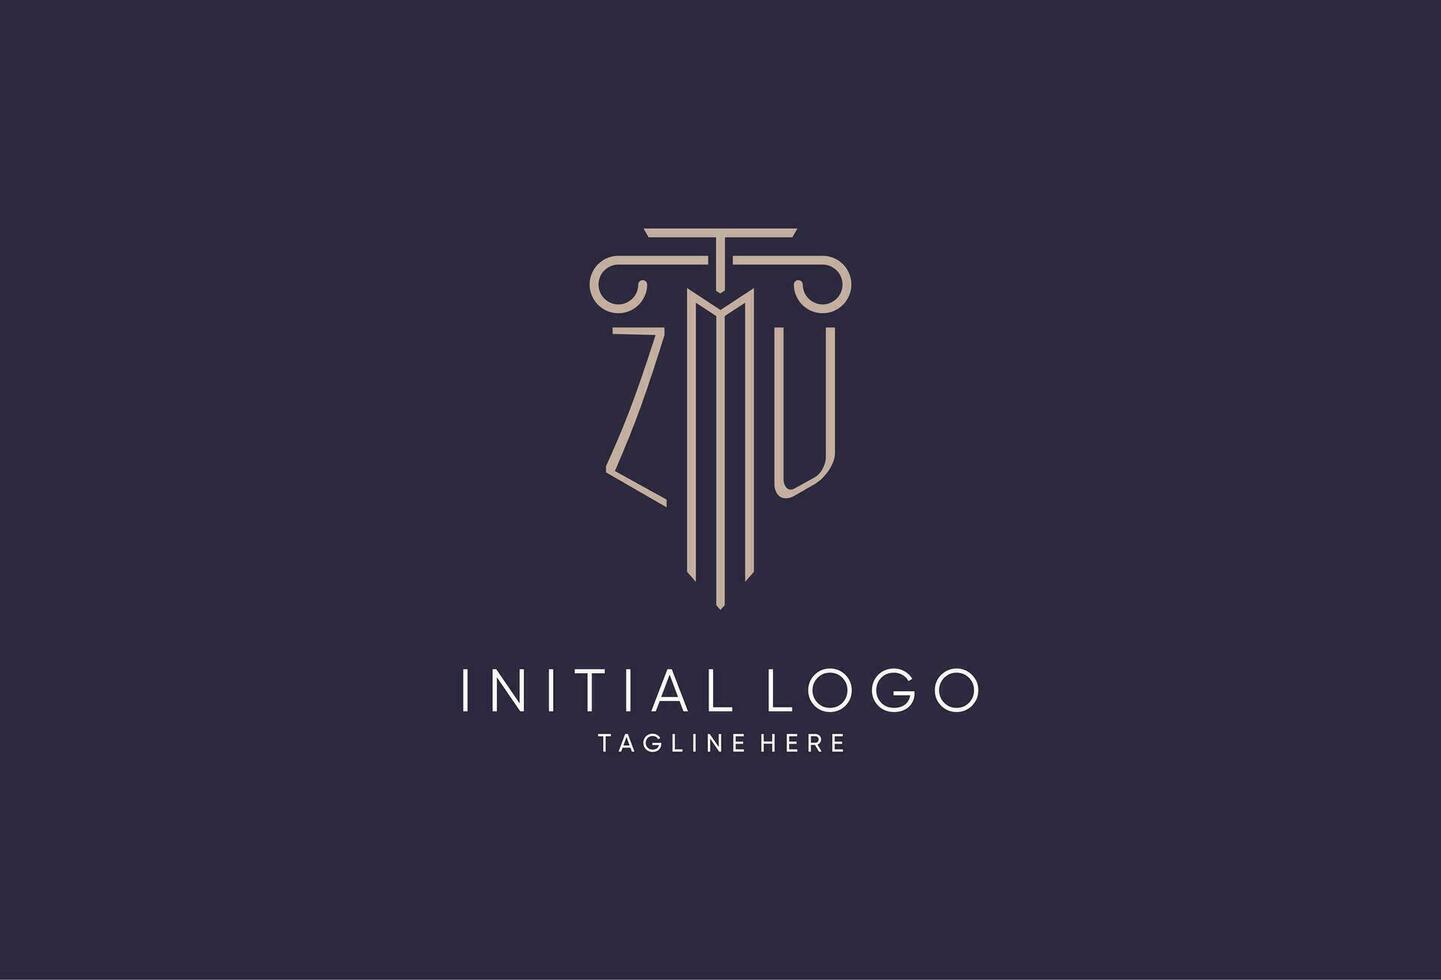 ZU logo initial pillar design with luxury modern style best design for legal firm vector